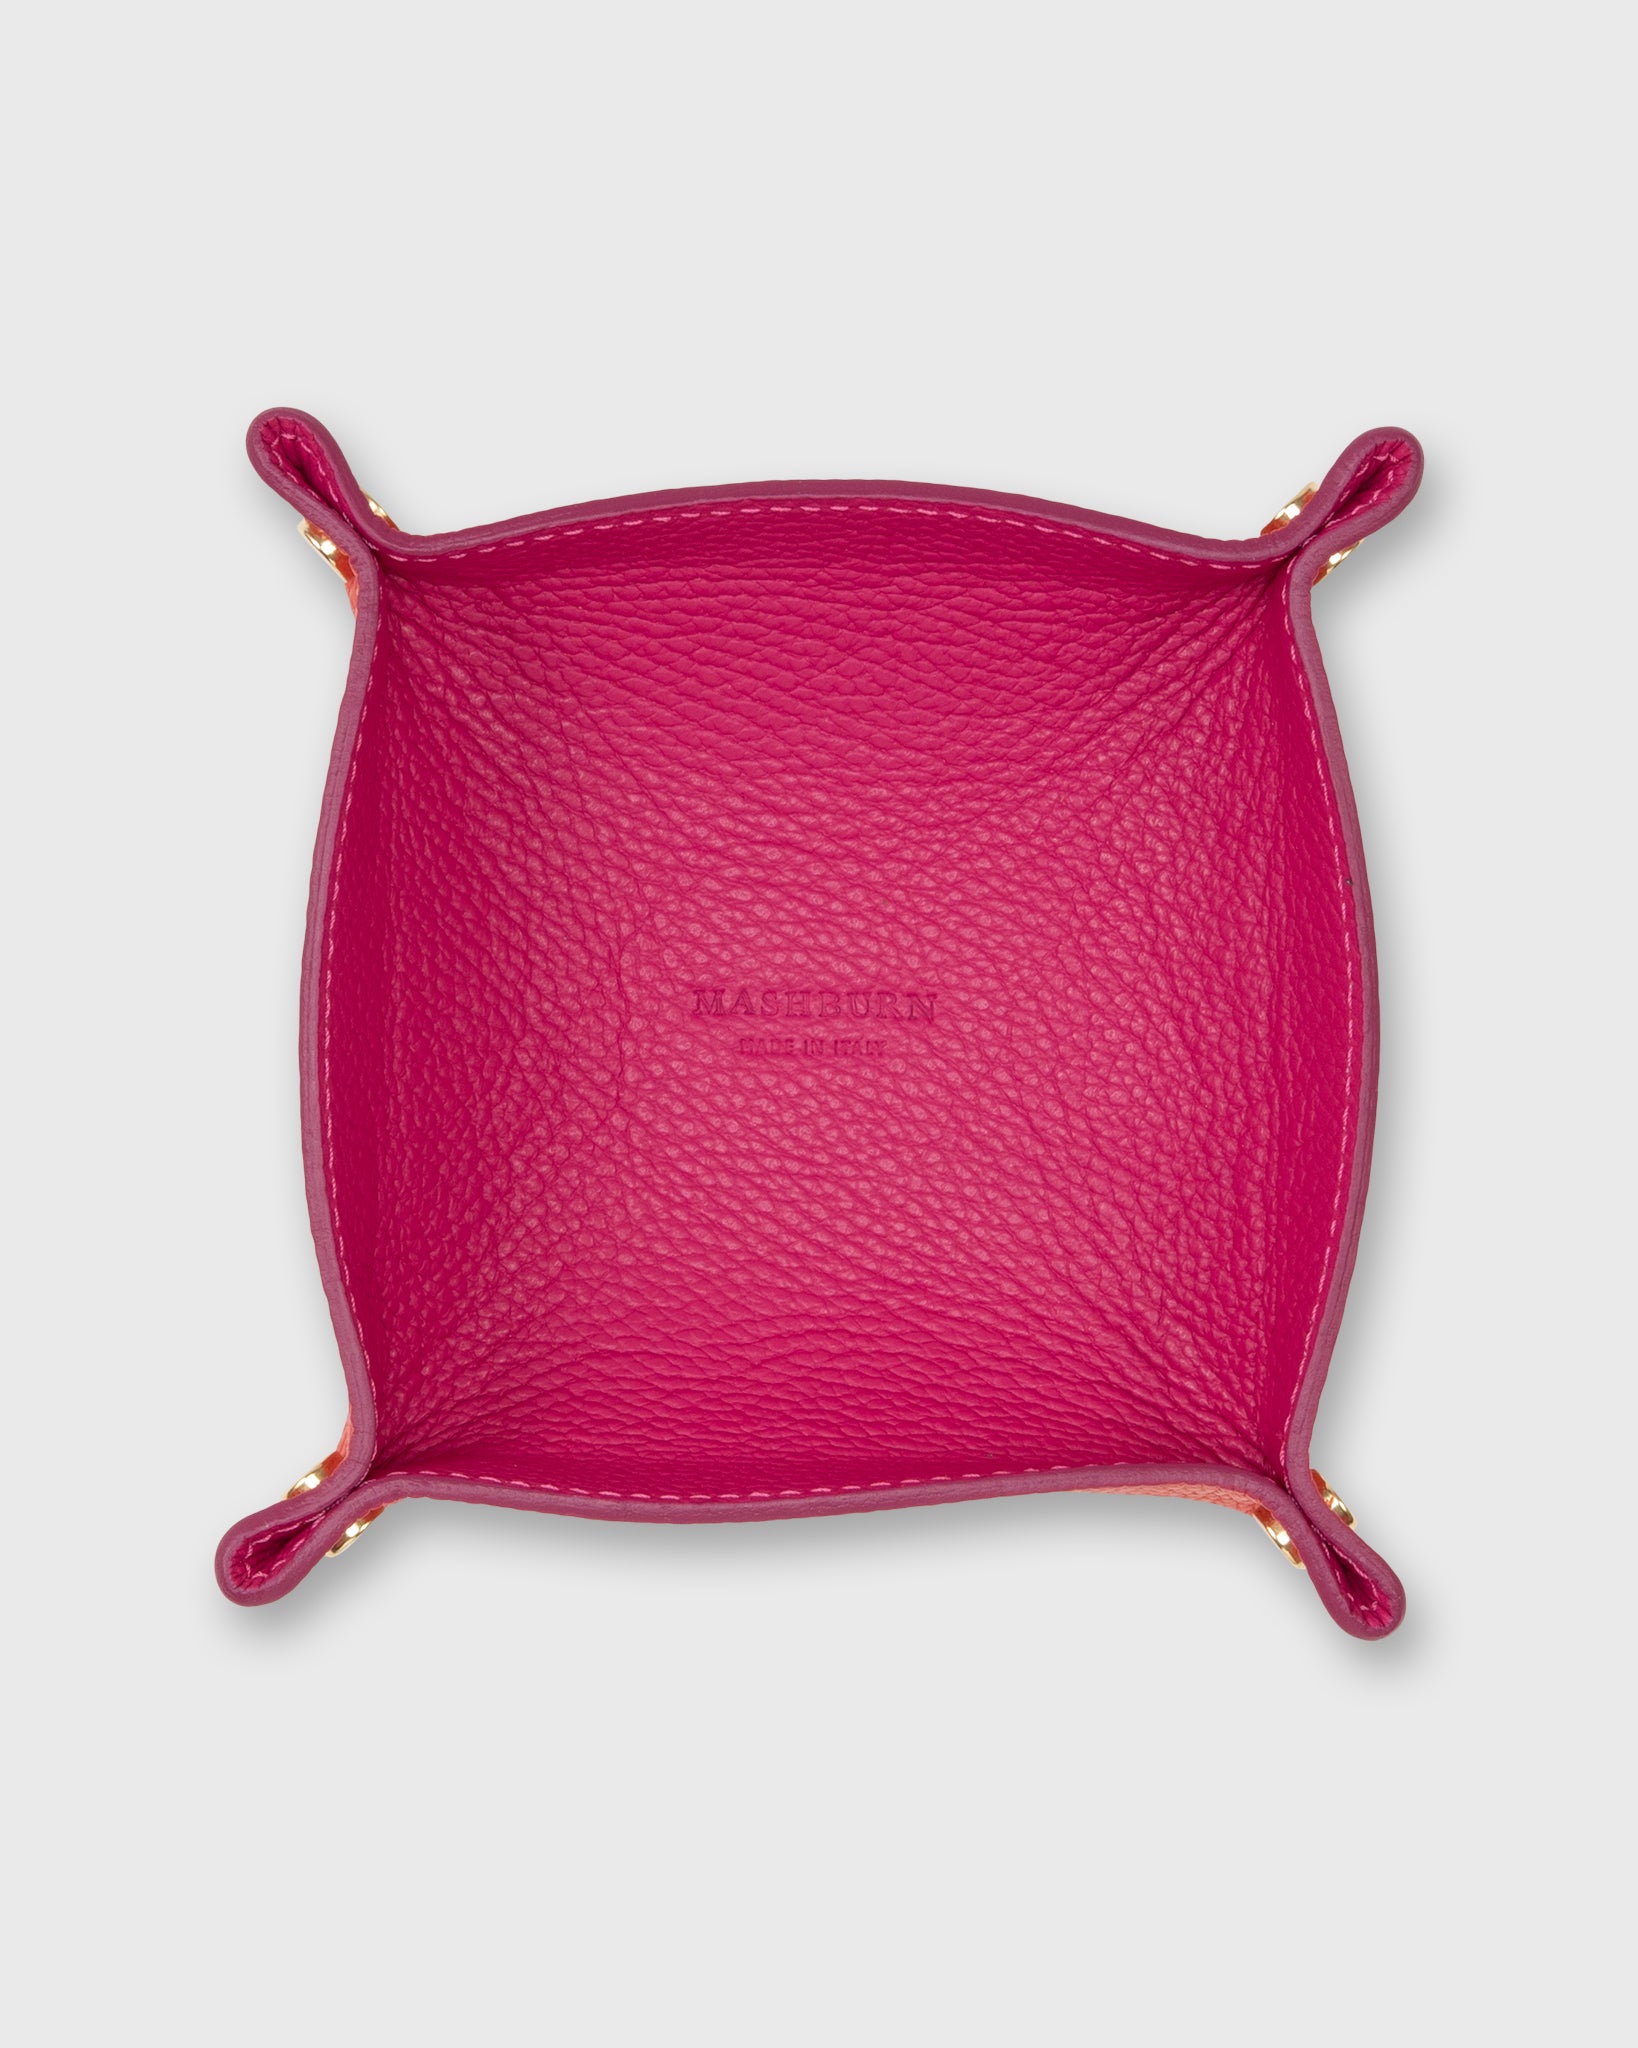 Two-Tone Soft Medium Square Tray in Fuchsia/Poppy Leather